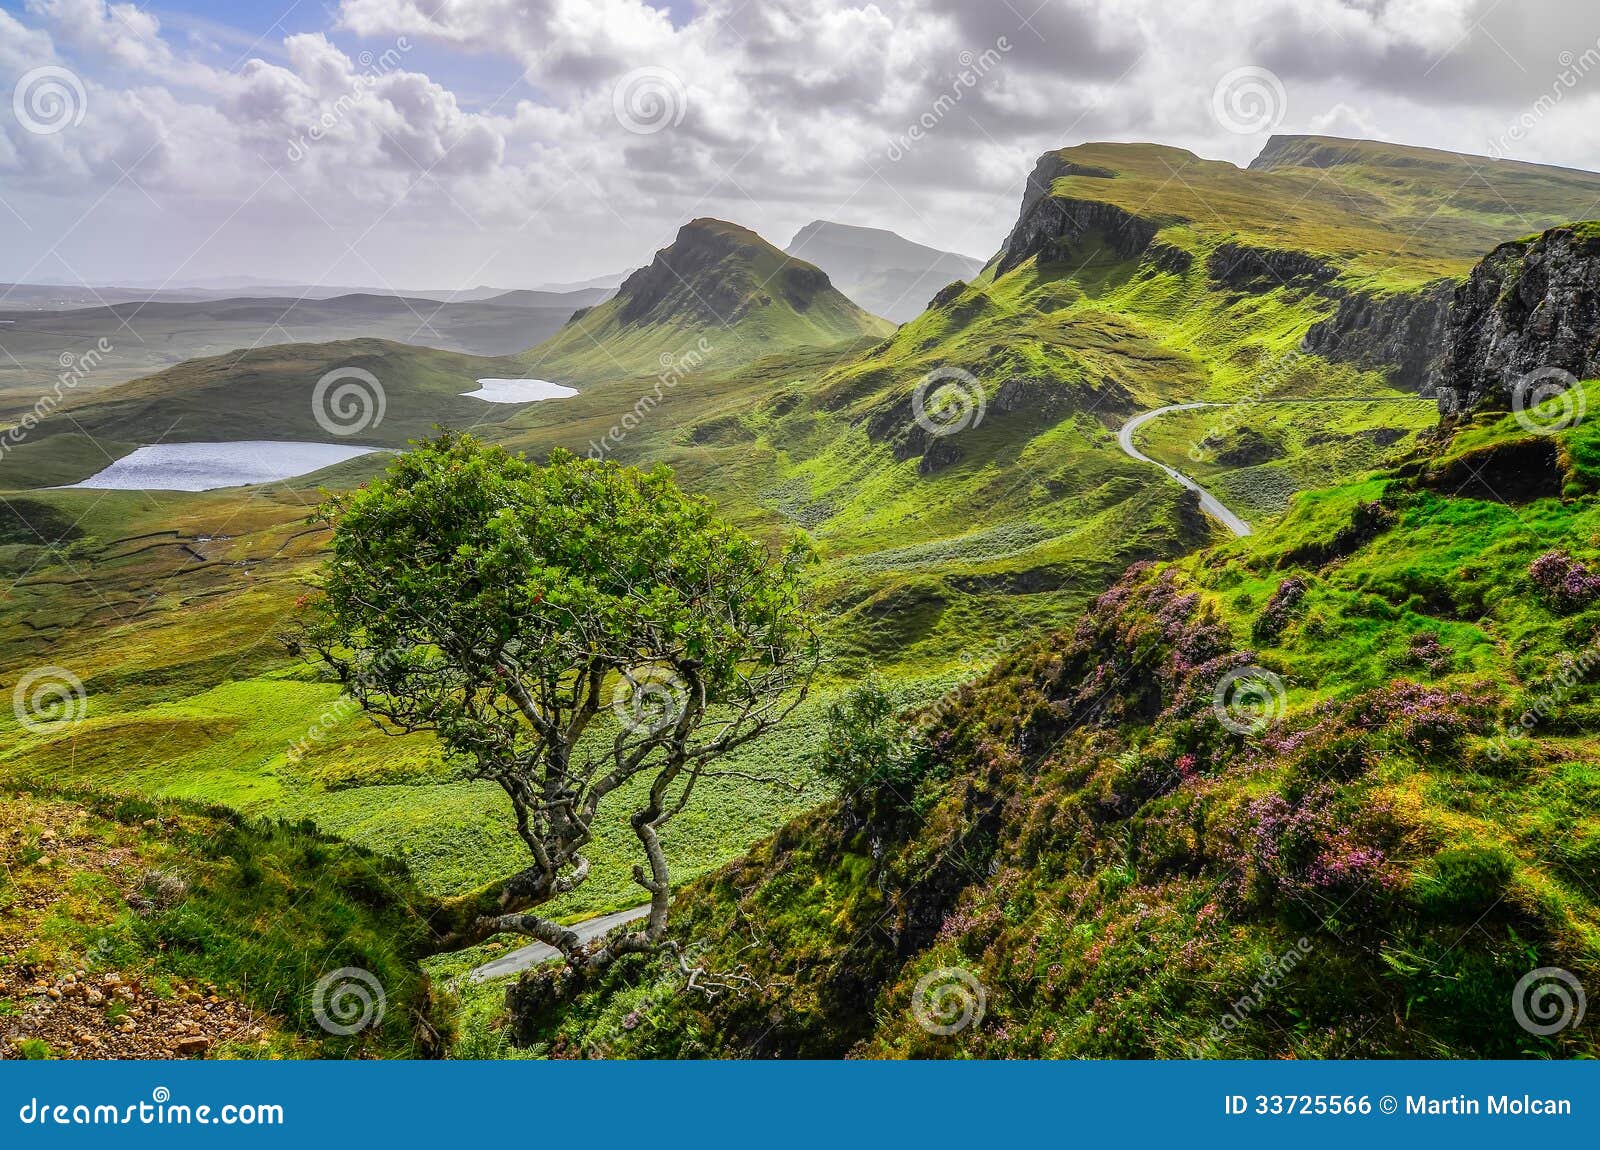 scenic view of quiraing mountains in isle of skye, scottish high